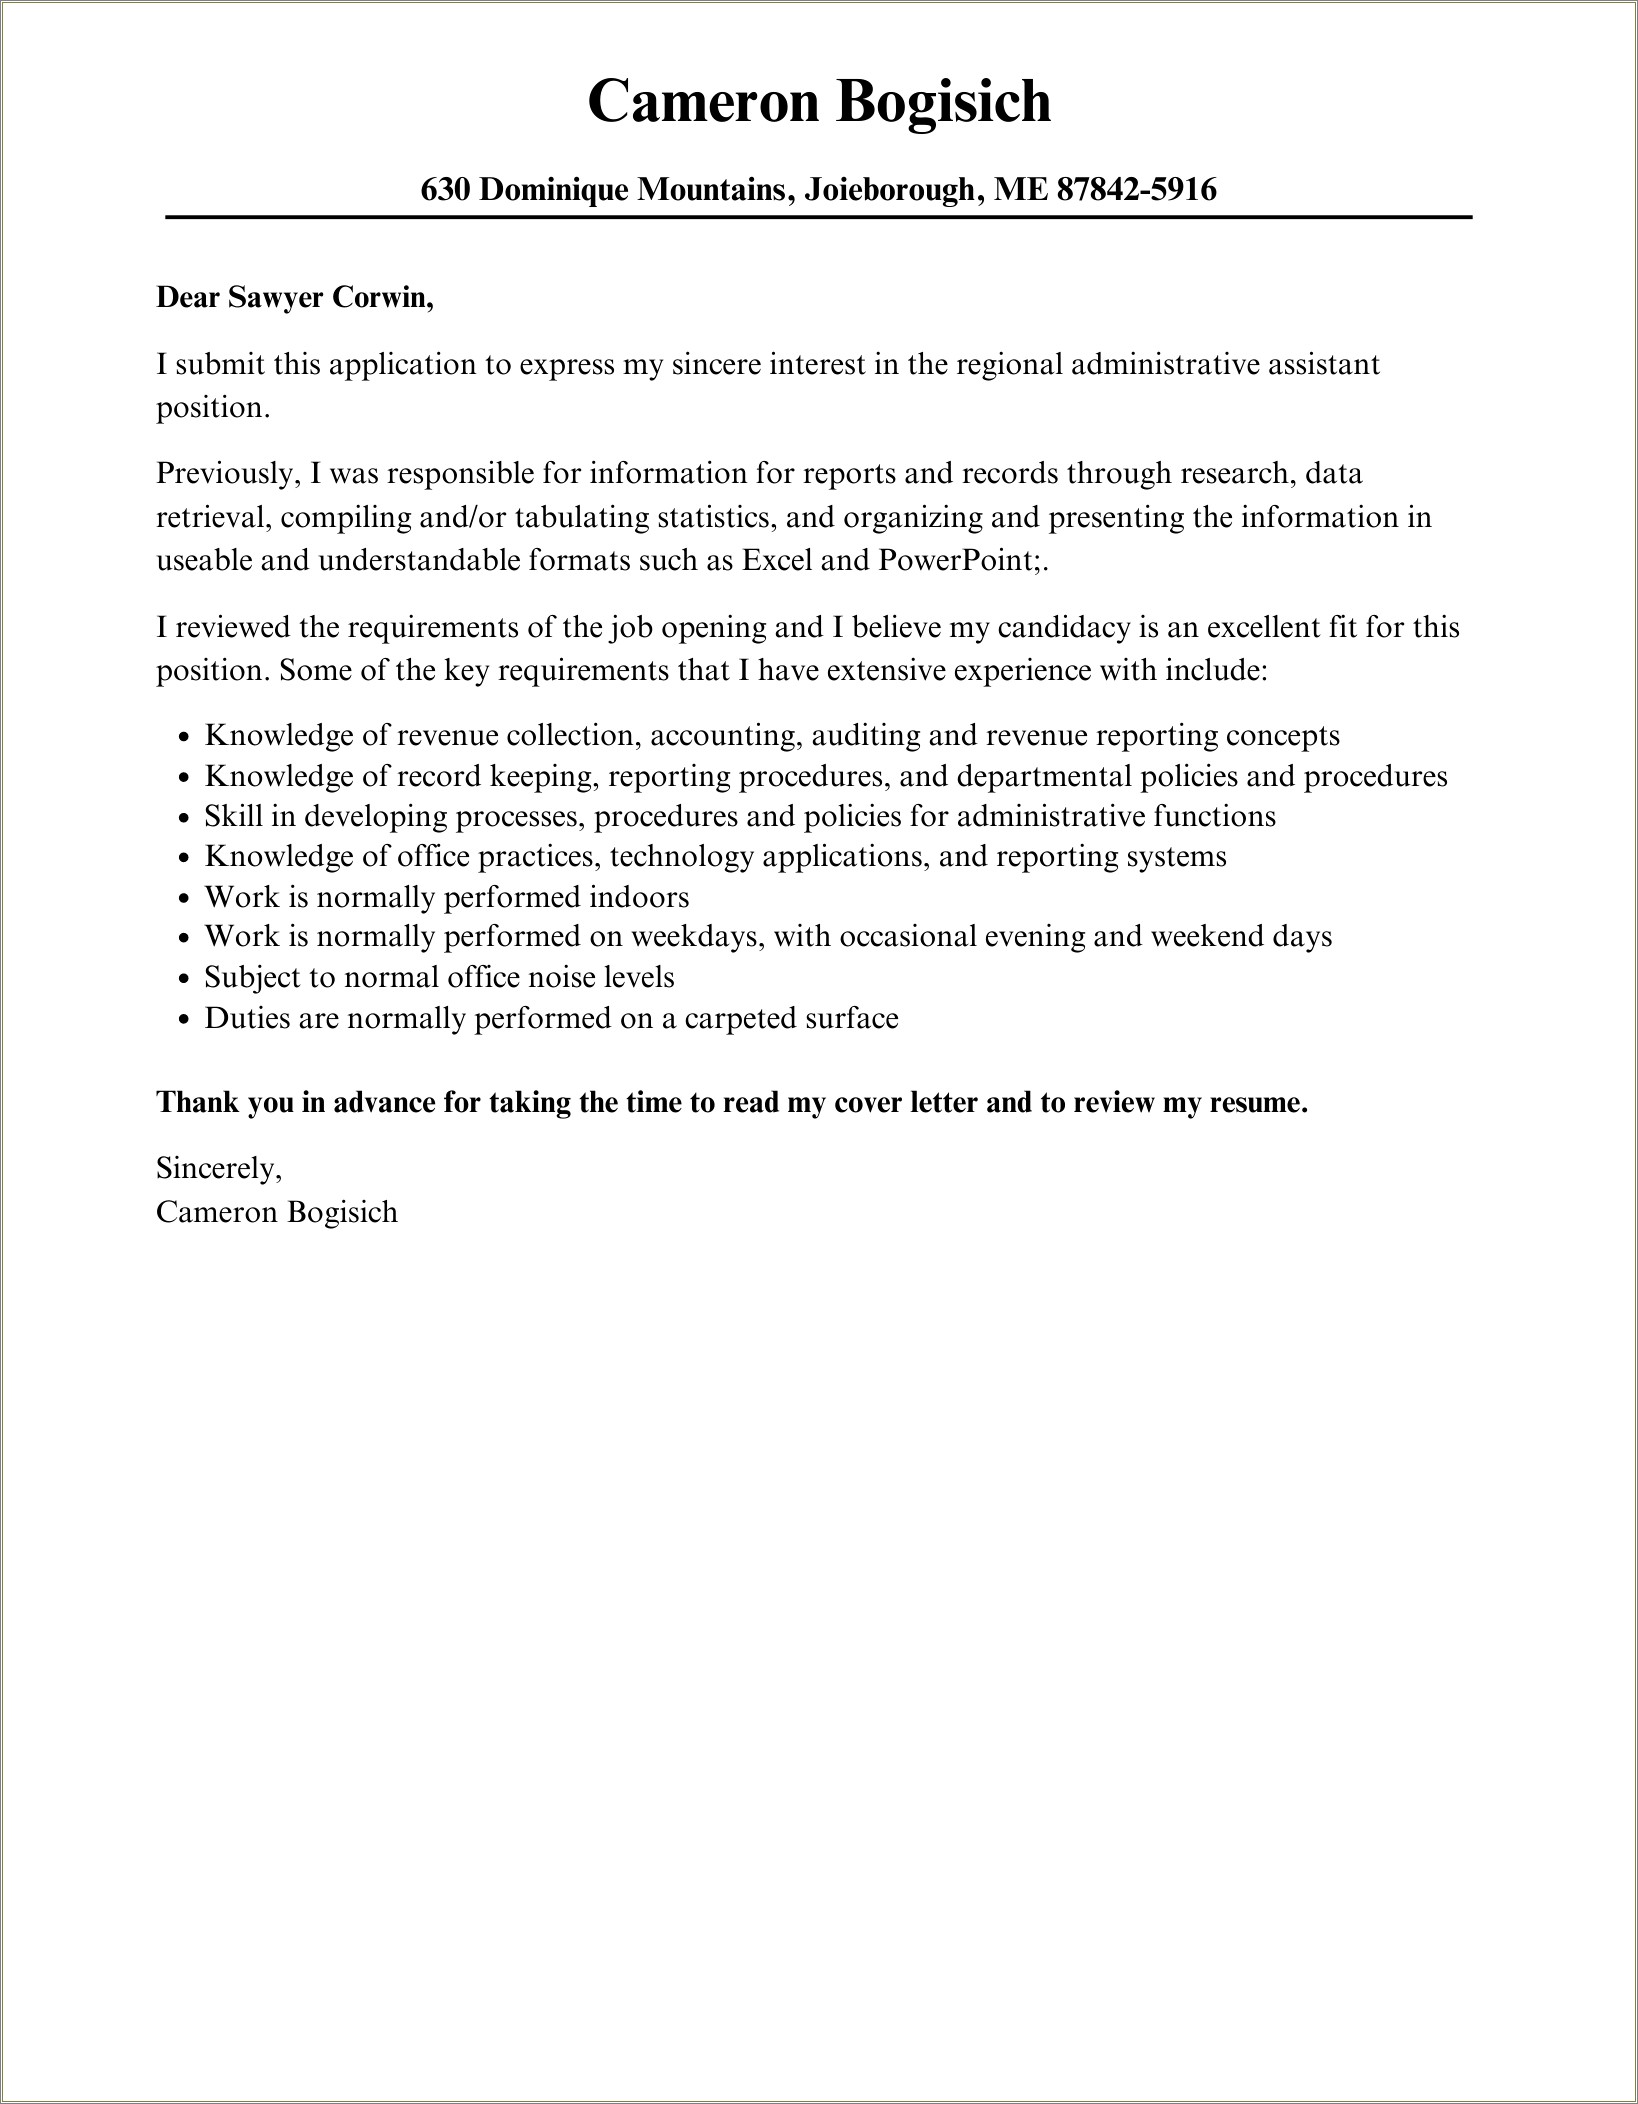 Resume Cover Letter Samples For Administrative Assistant Job